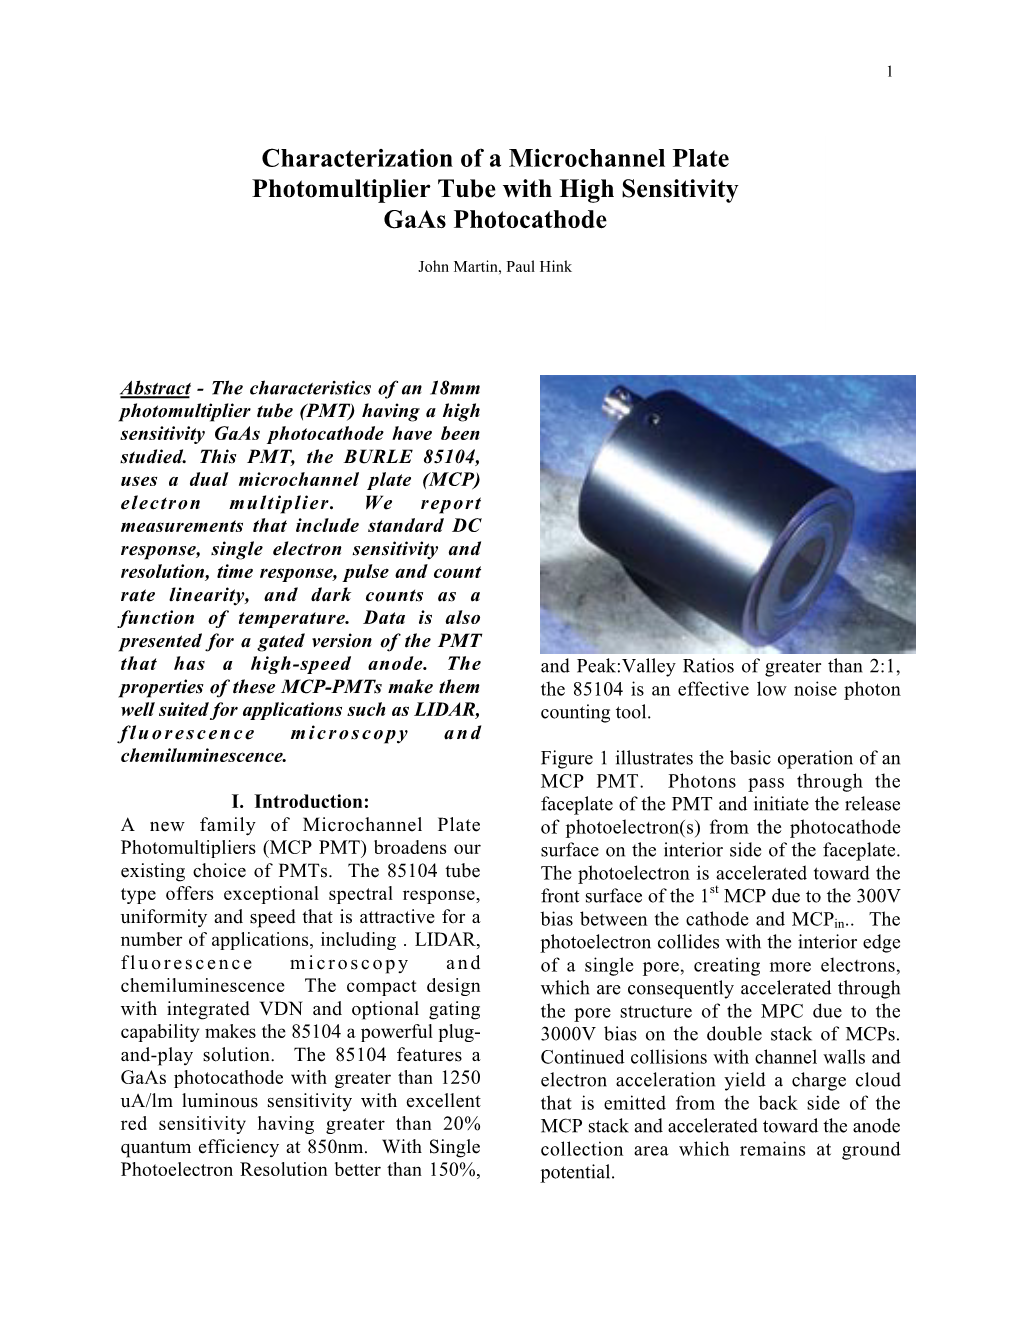 Characterization of a Microchannel Plate Photomultiplier Tube with High Sensitivity Gaas Photocathode